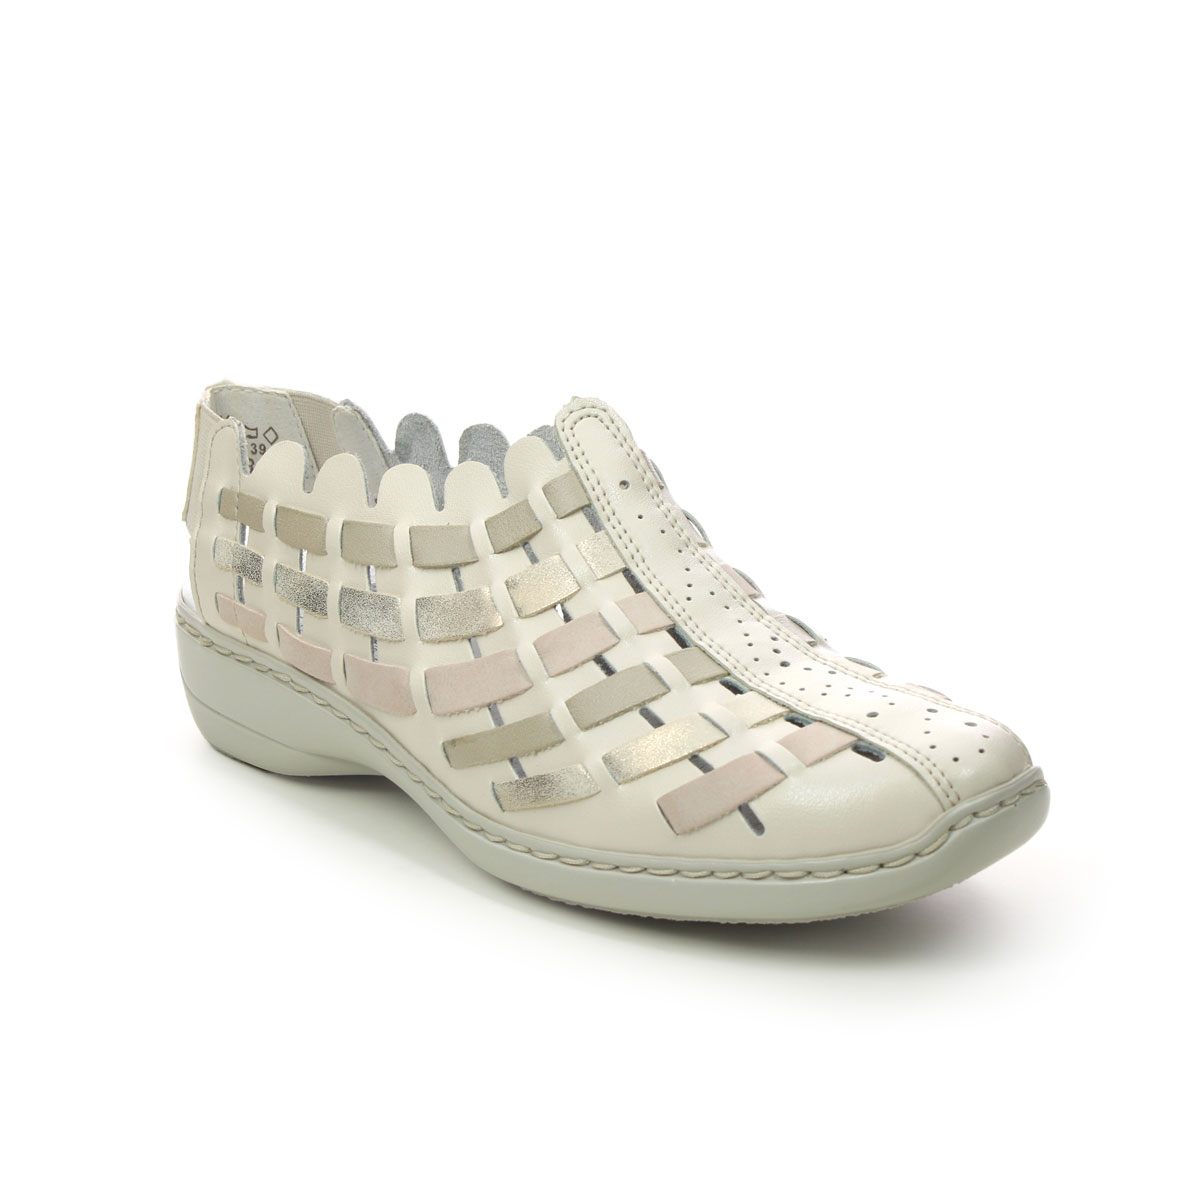 Rieker Dorsina Beige Gold Womens Closed Toe Sandals 413V8-60 In Size 39 In Plain Beige Gold